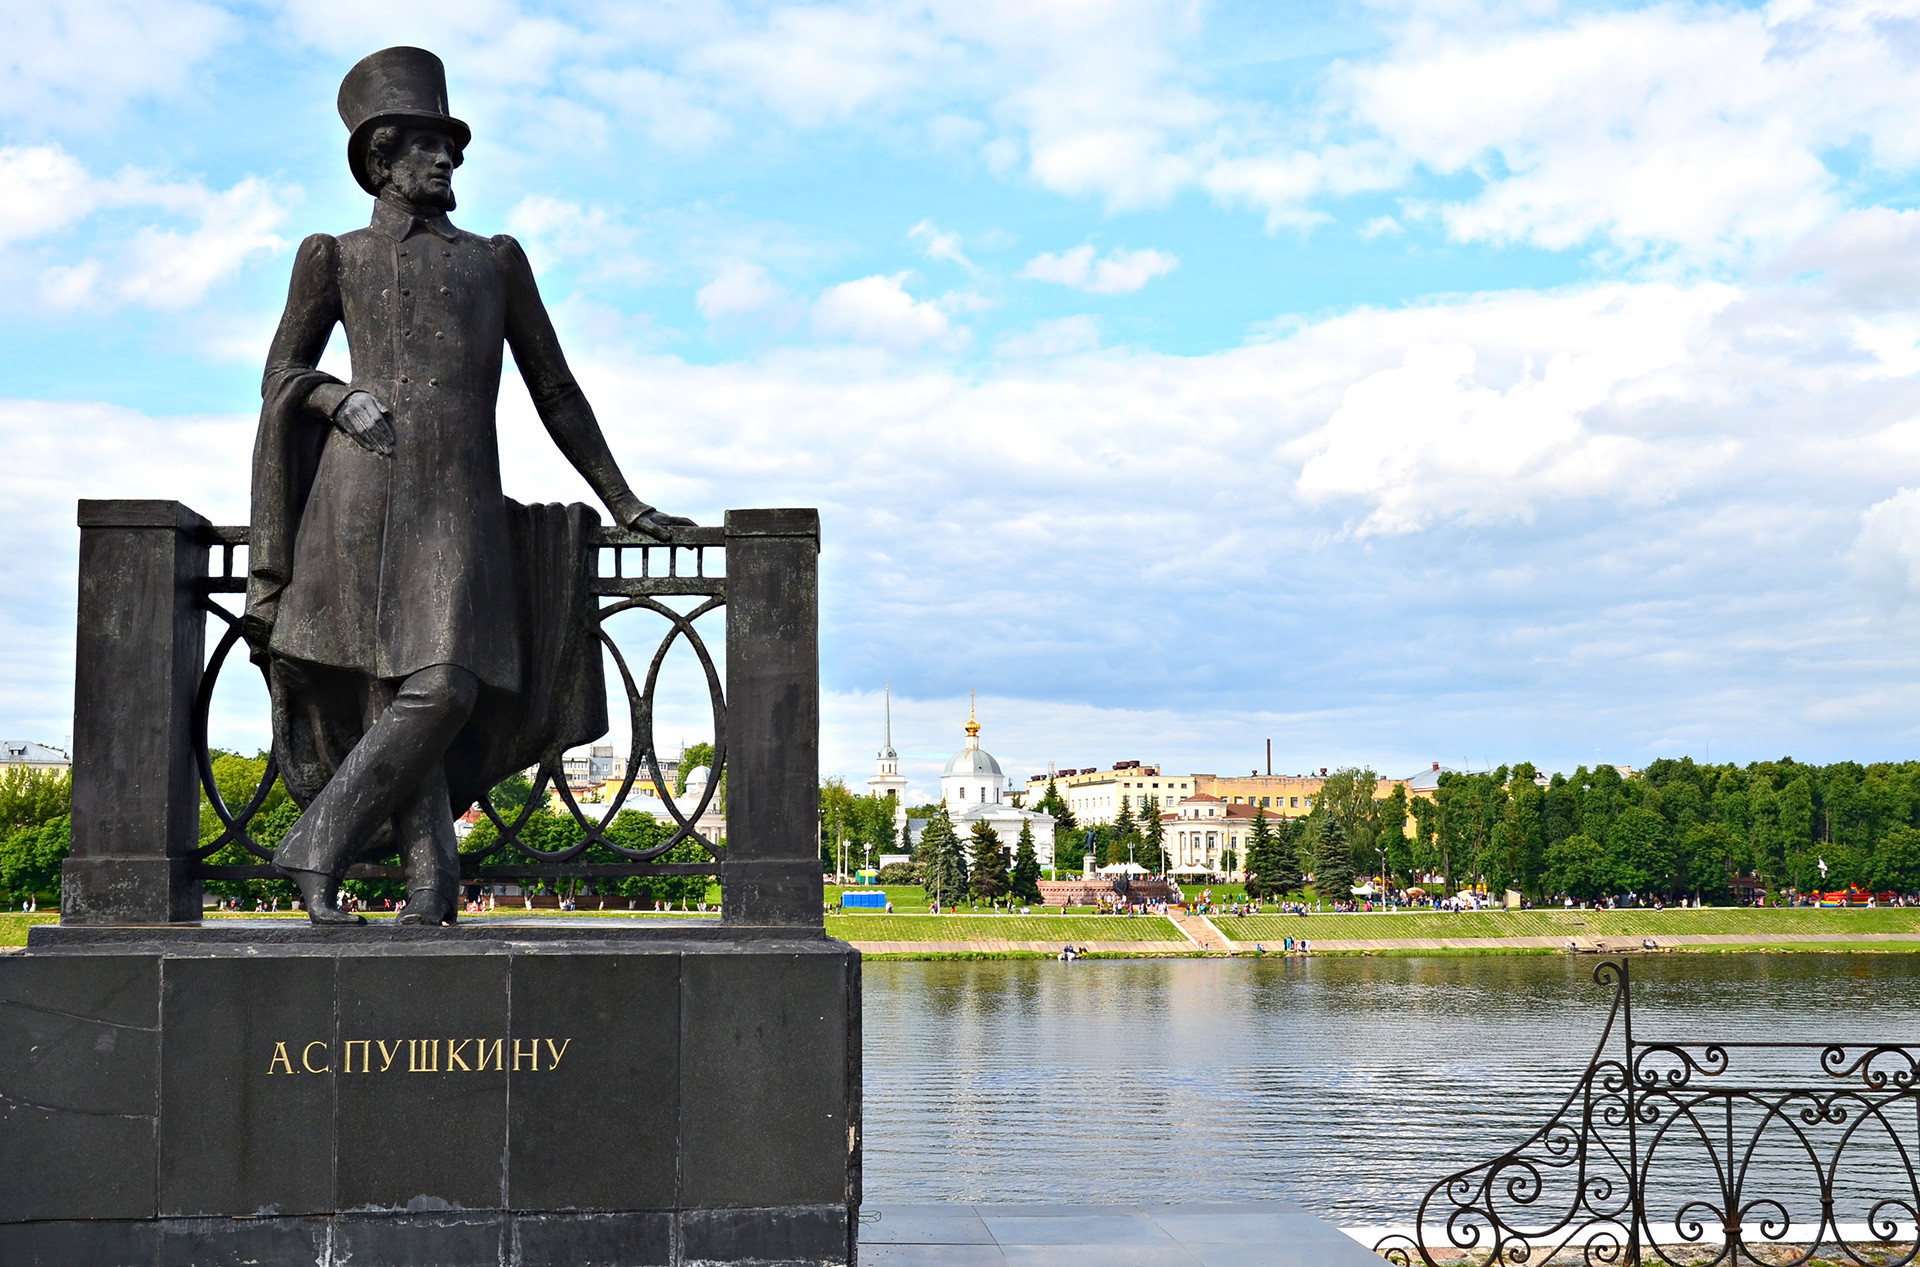 Alexander Pushkin greets you from the river Volga.